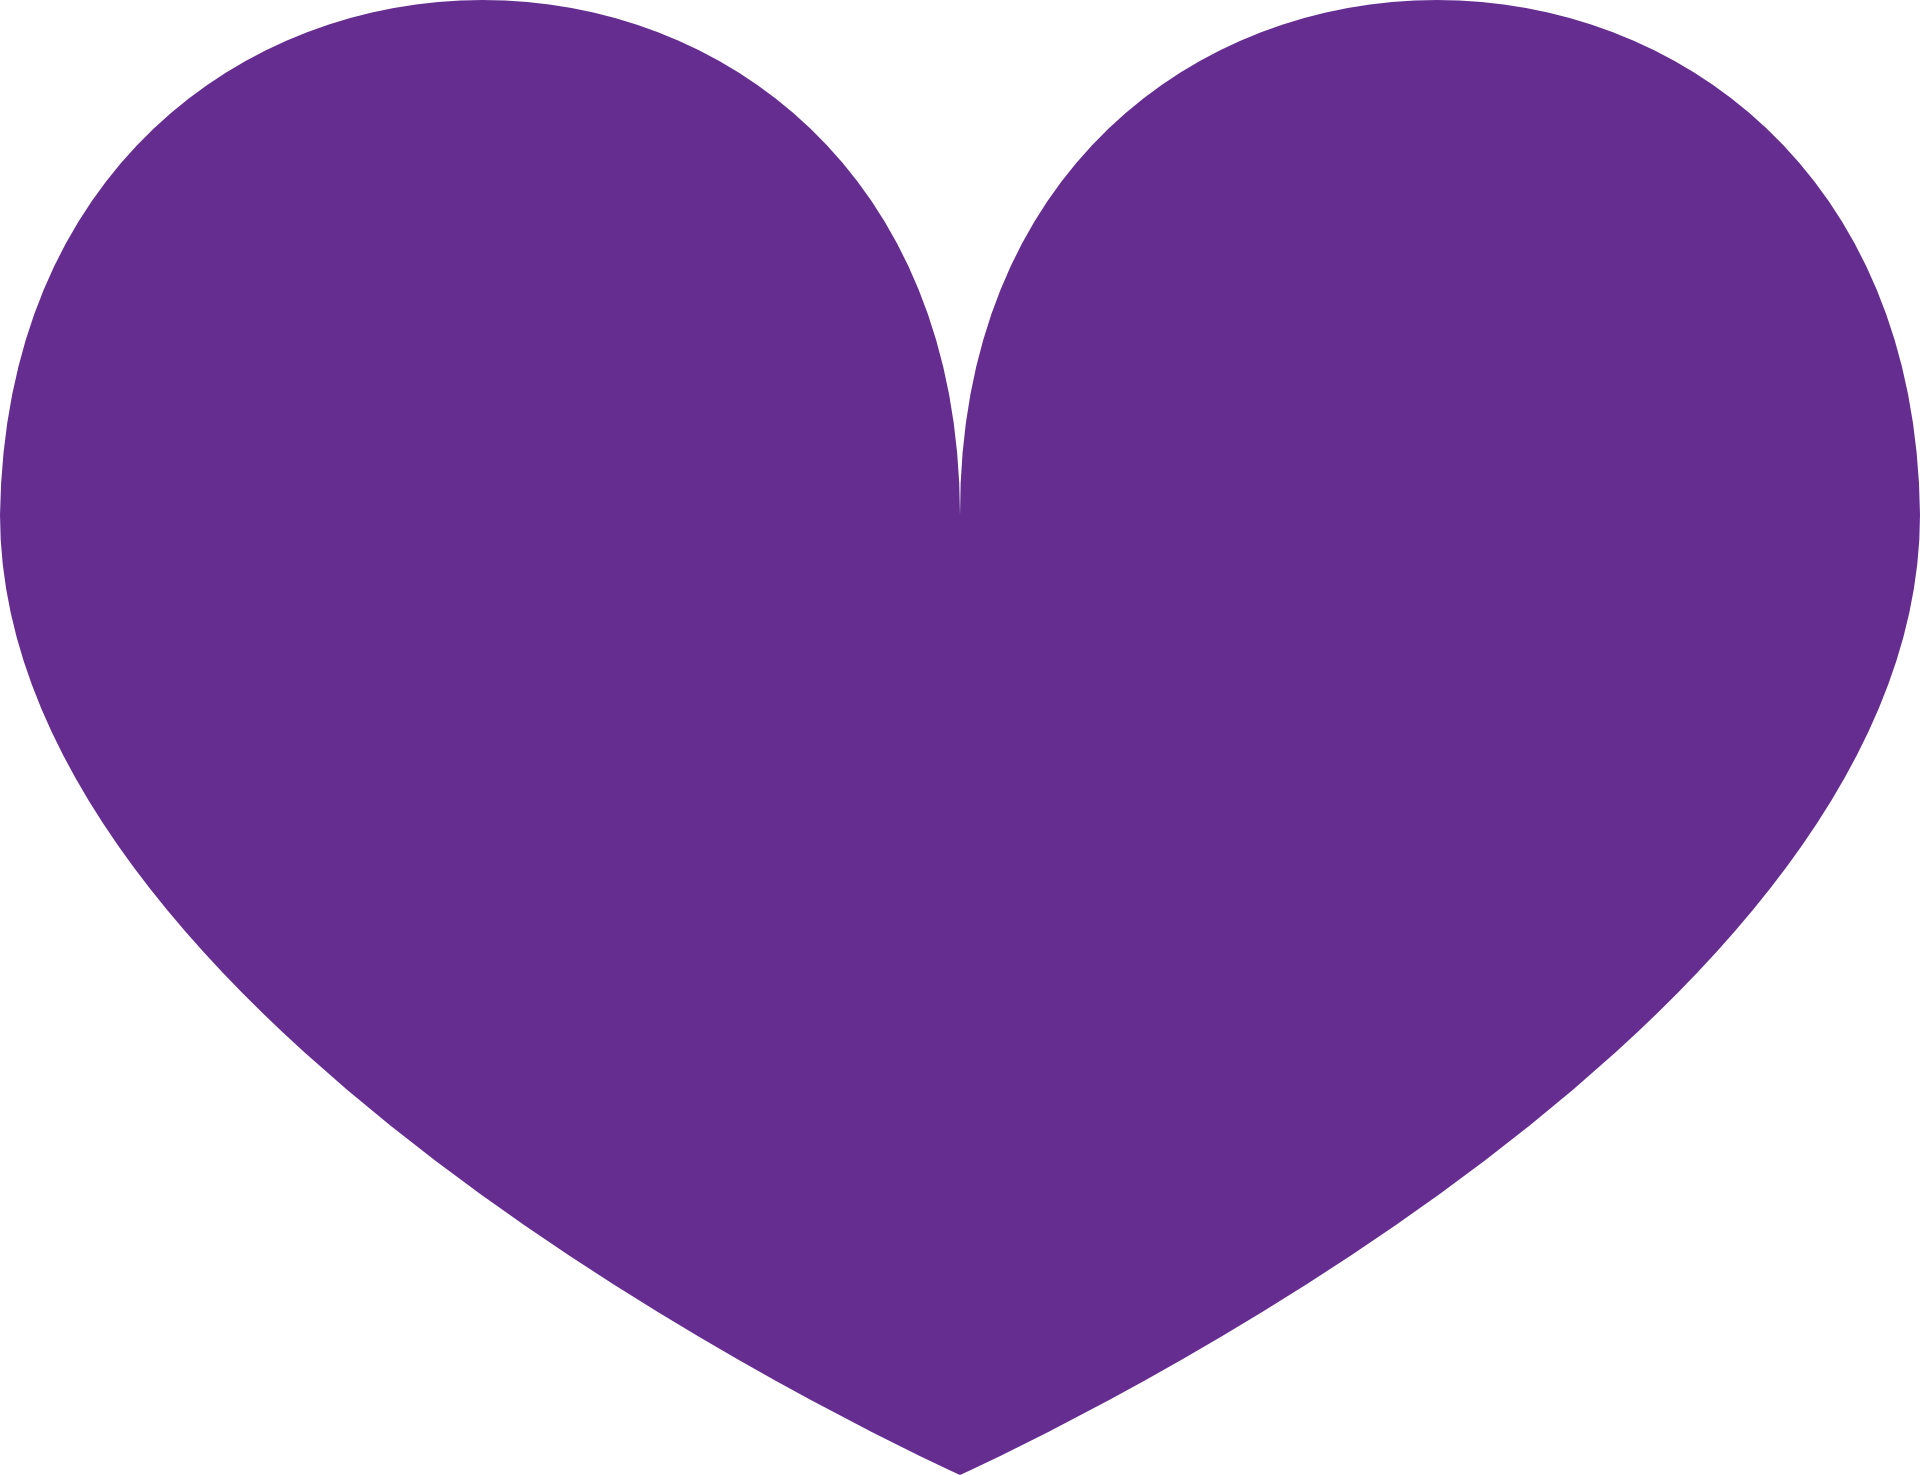 Purple heart love shapes romantic free image download